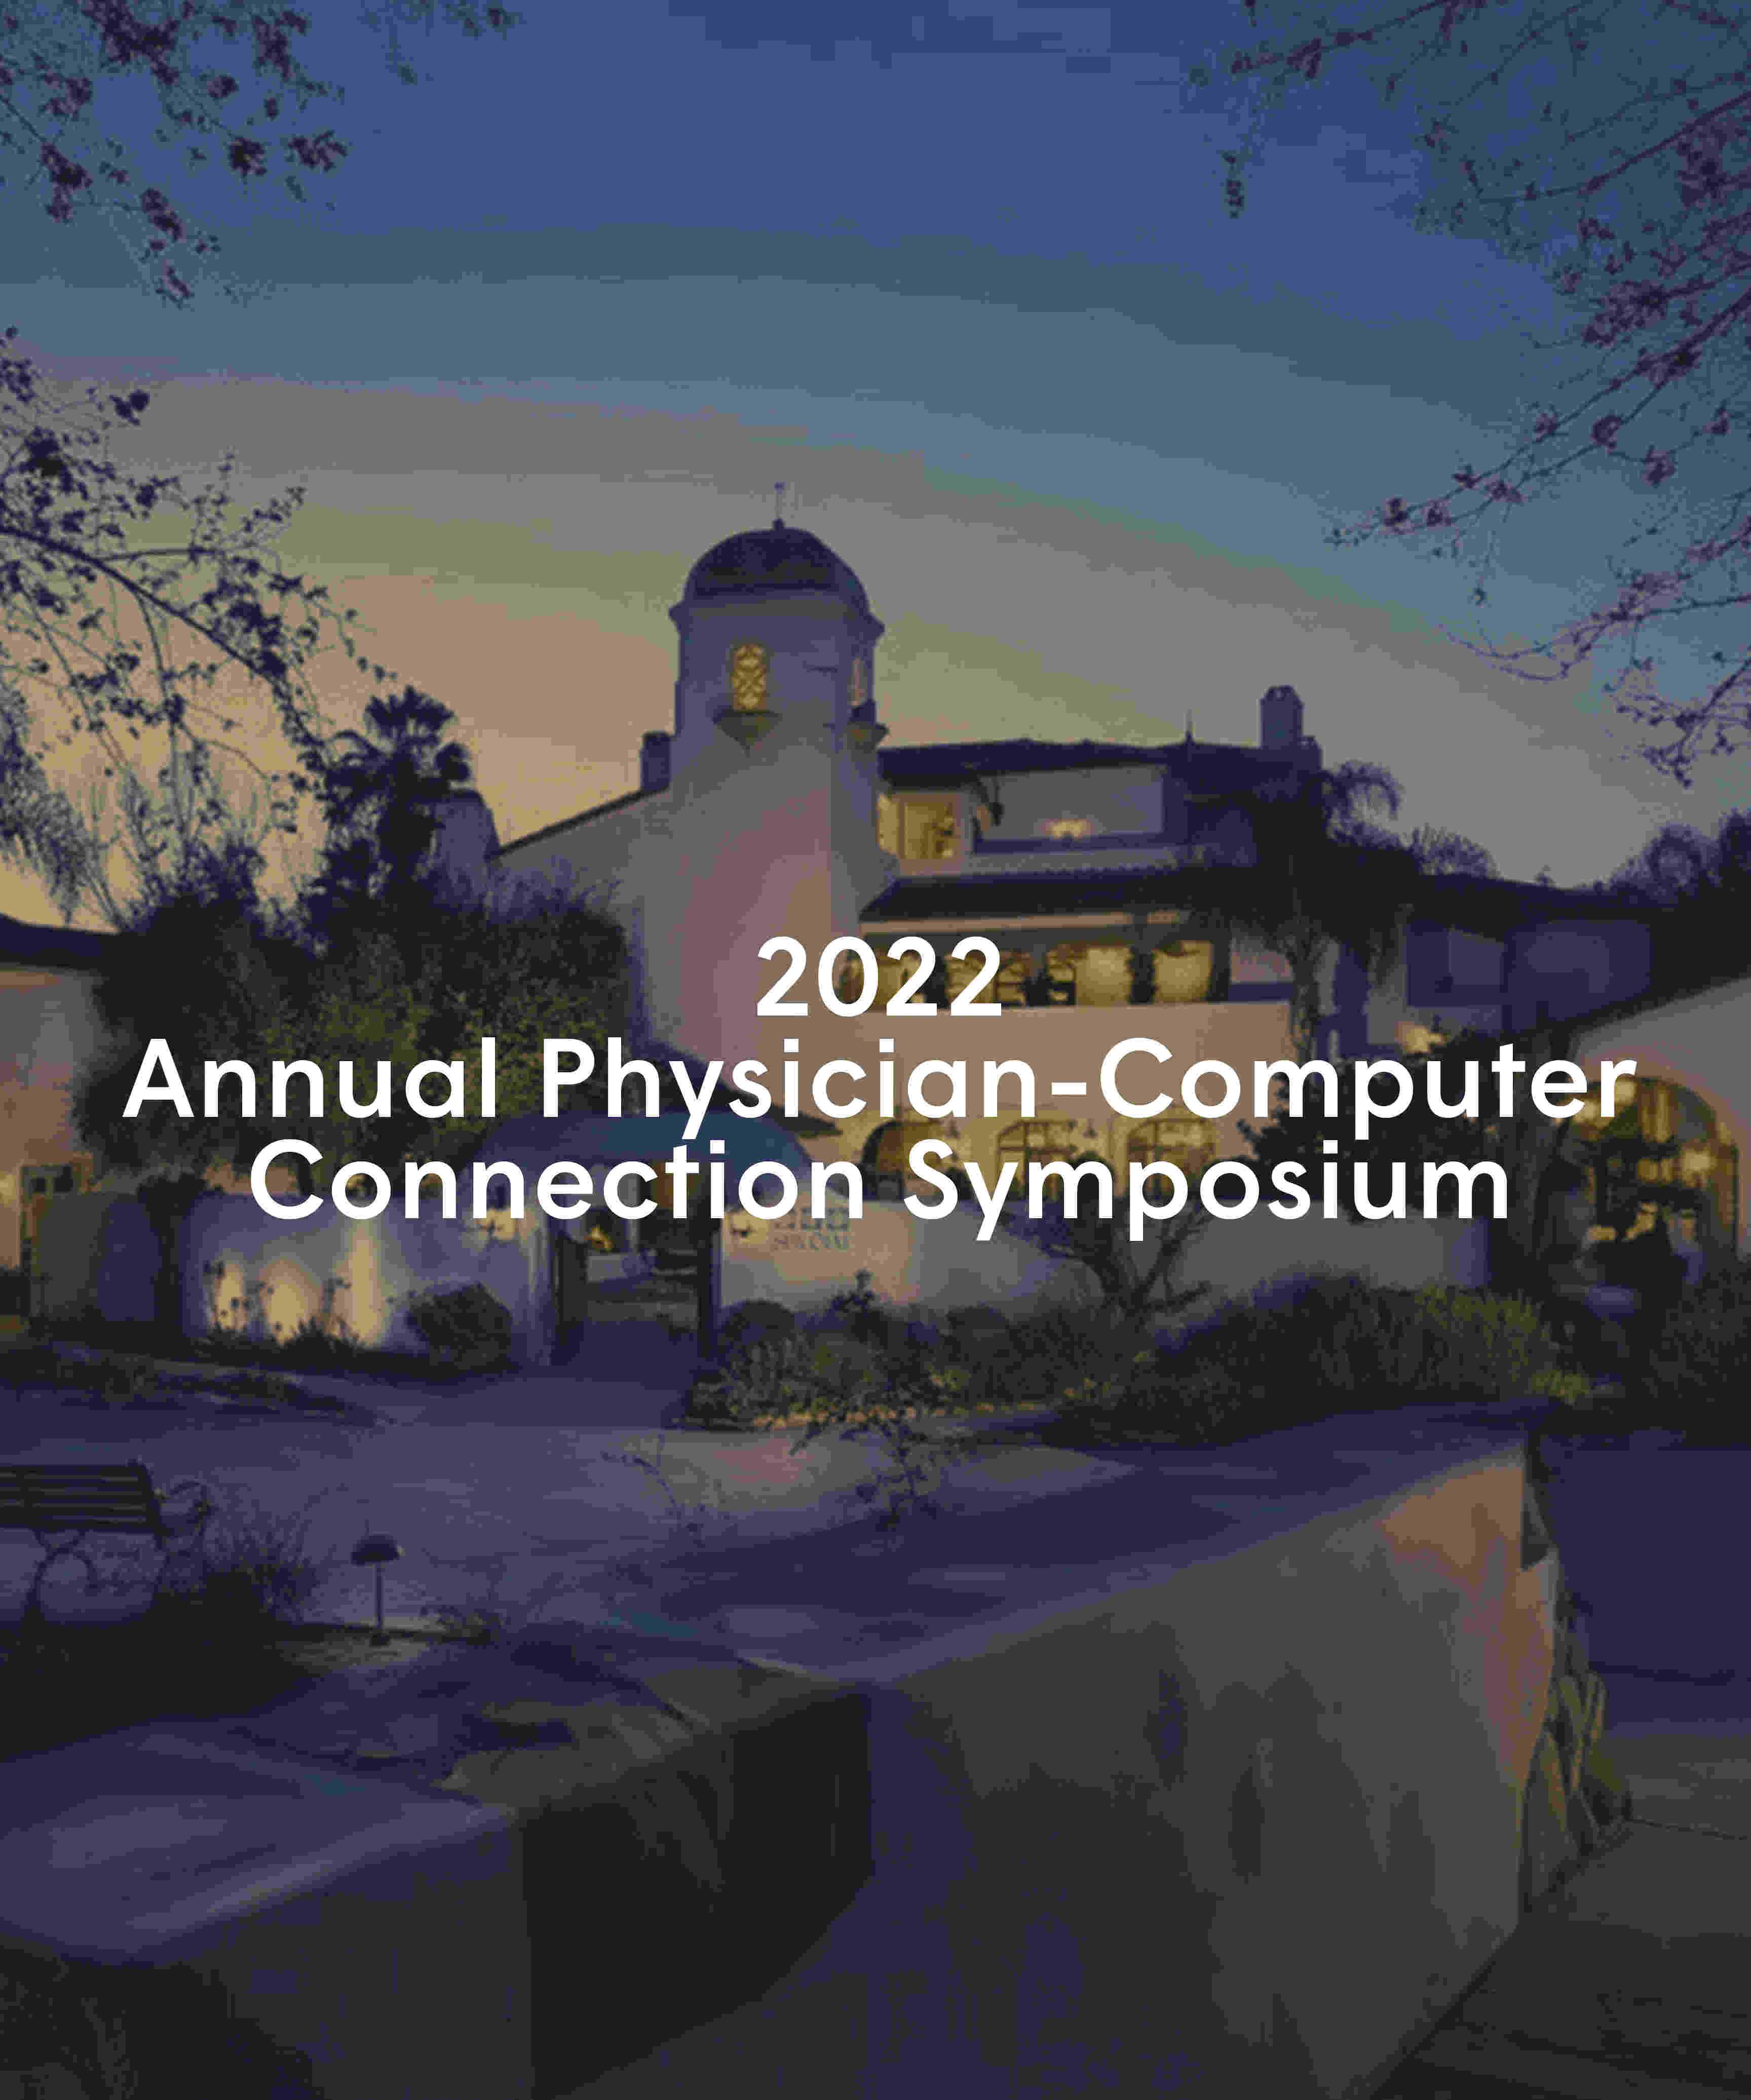 AMDIS - Annual Physician-Computer Connection Symposium